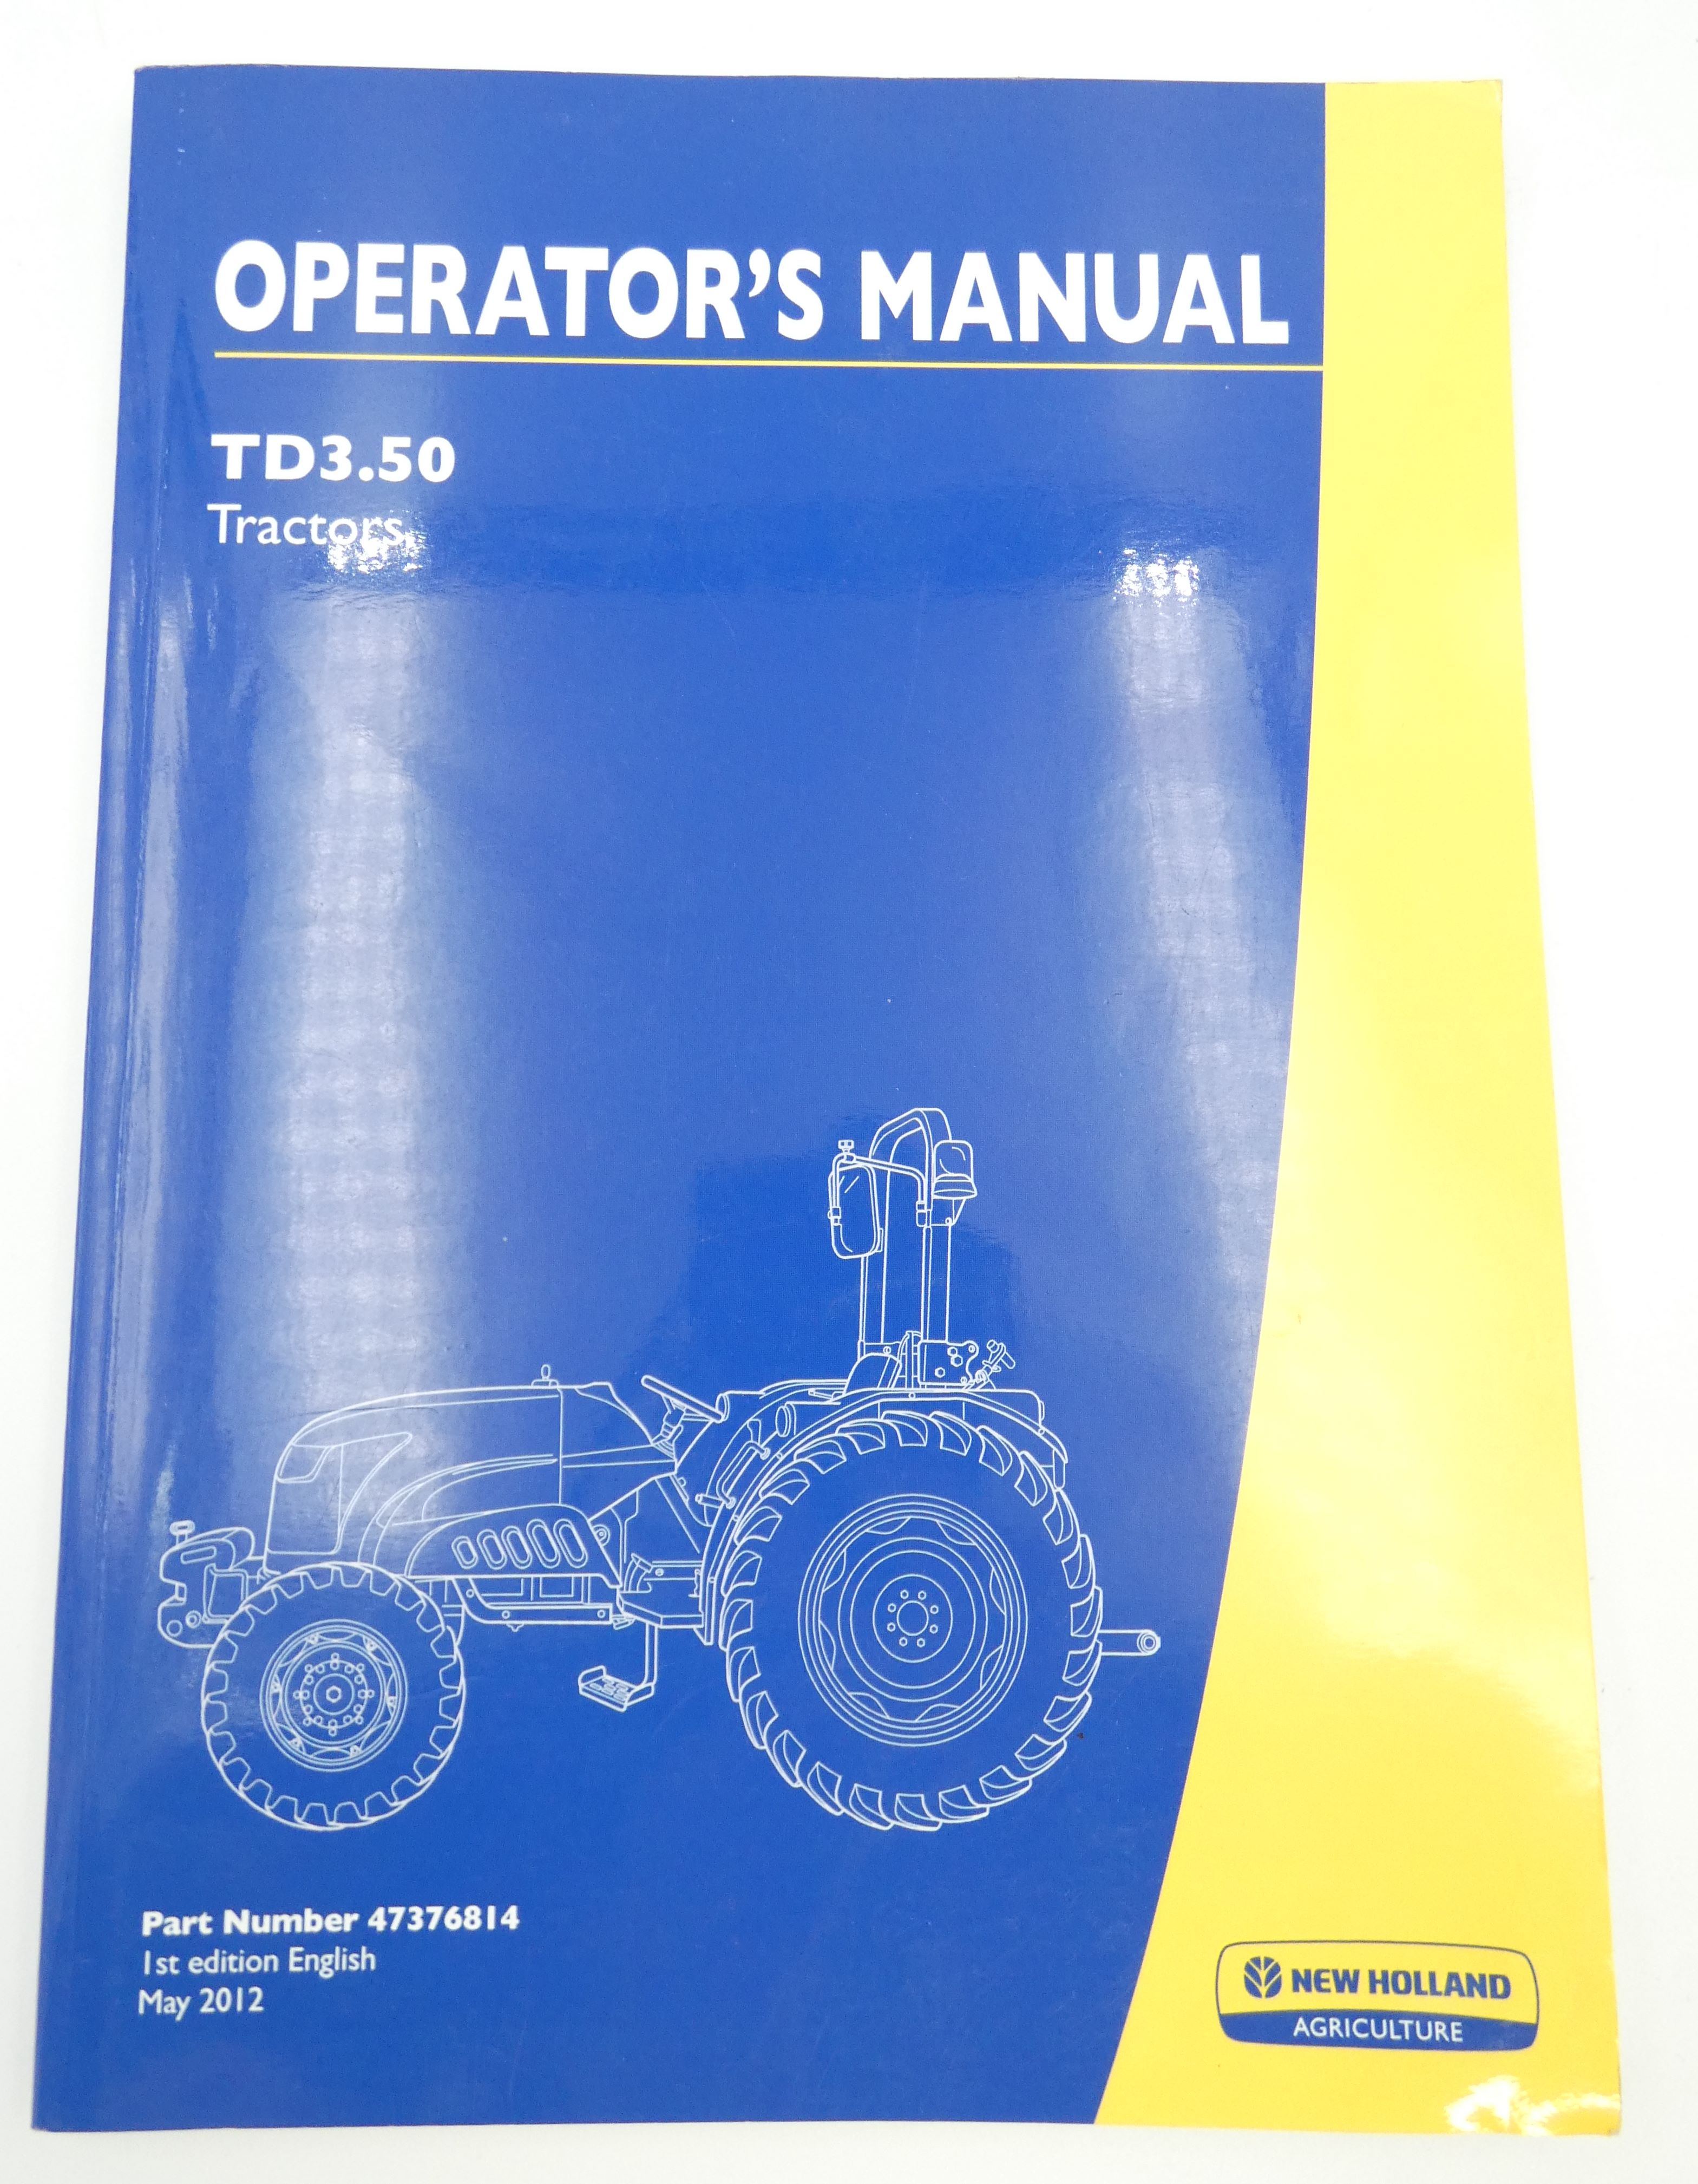 New Holland TD3.50 operator's manual